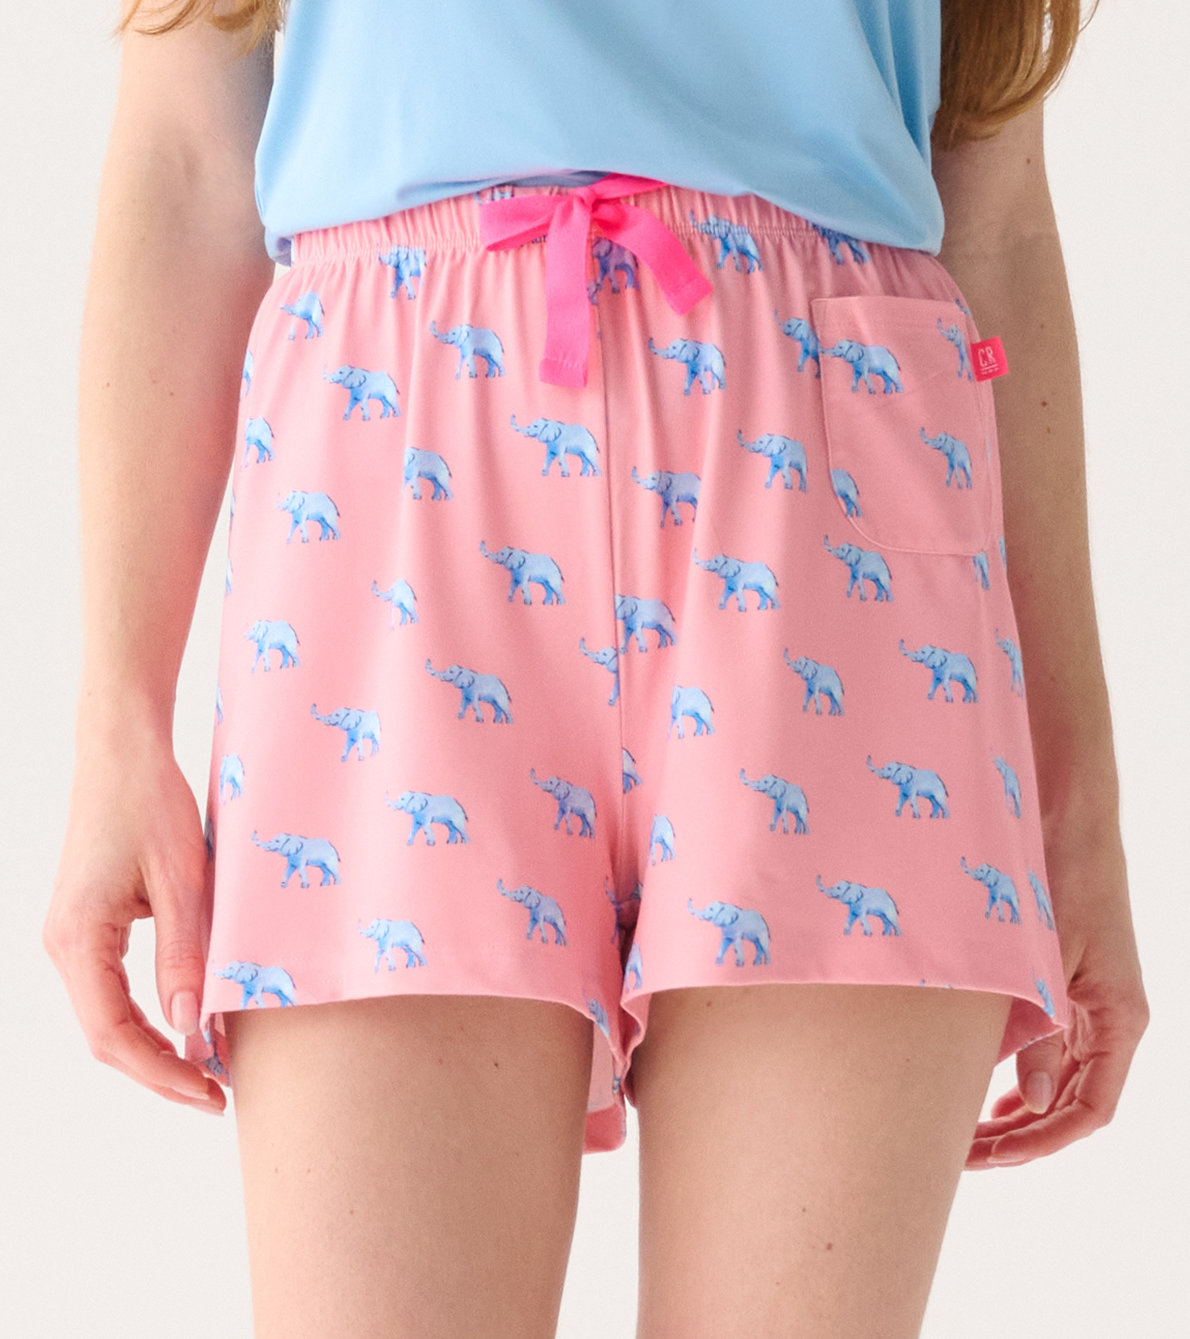 View larger image of Capelton Road Women's Elephantastic Pajama Shorts